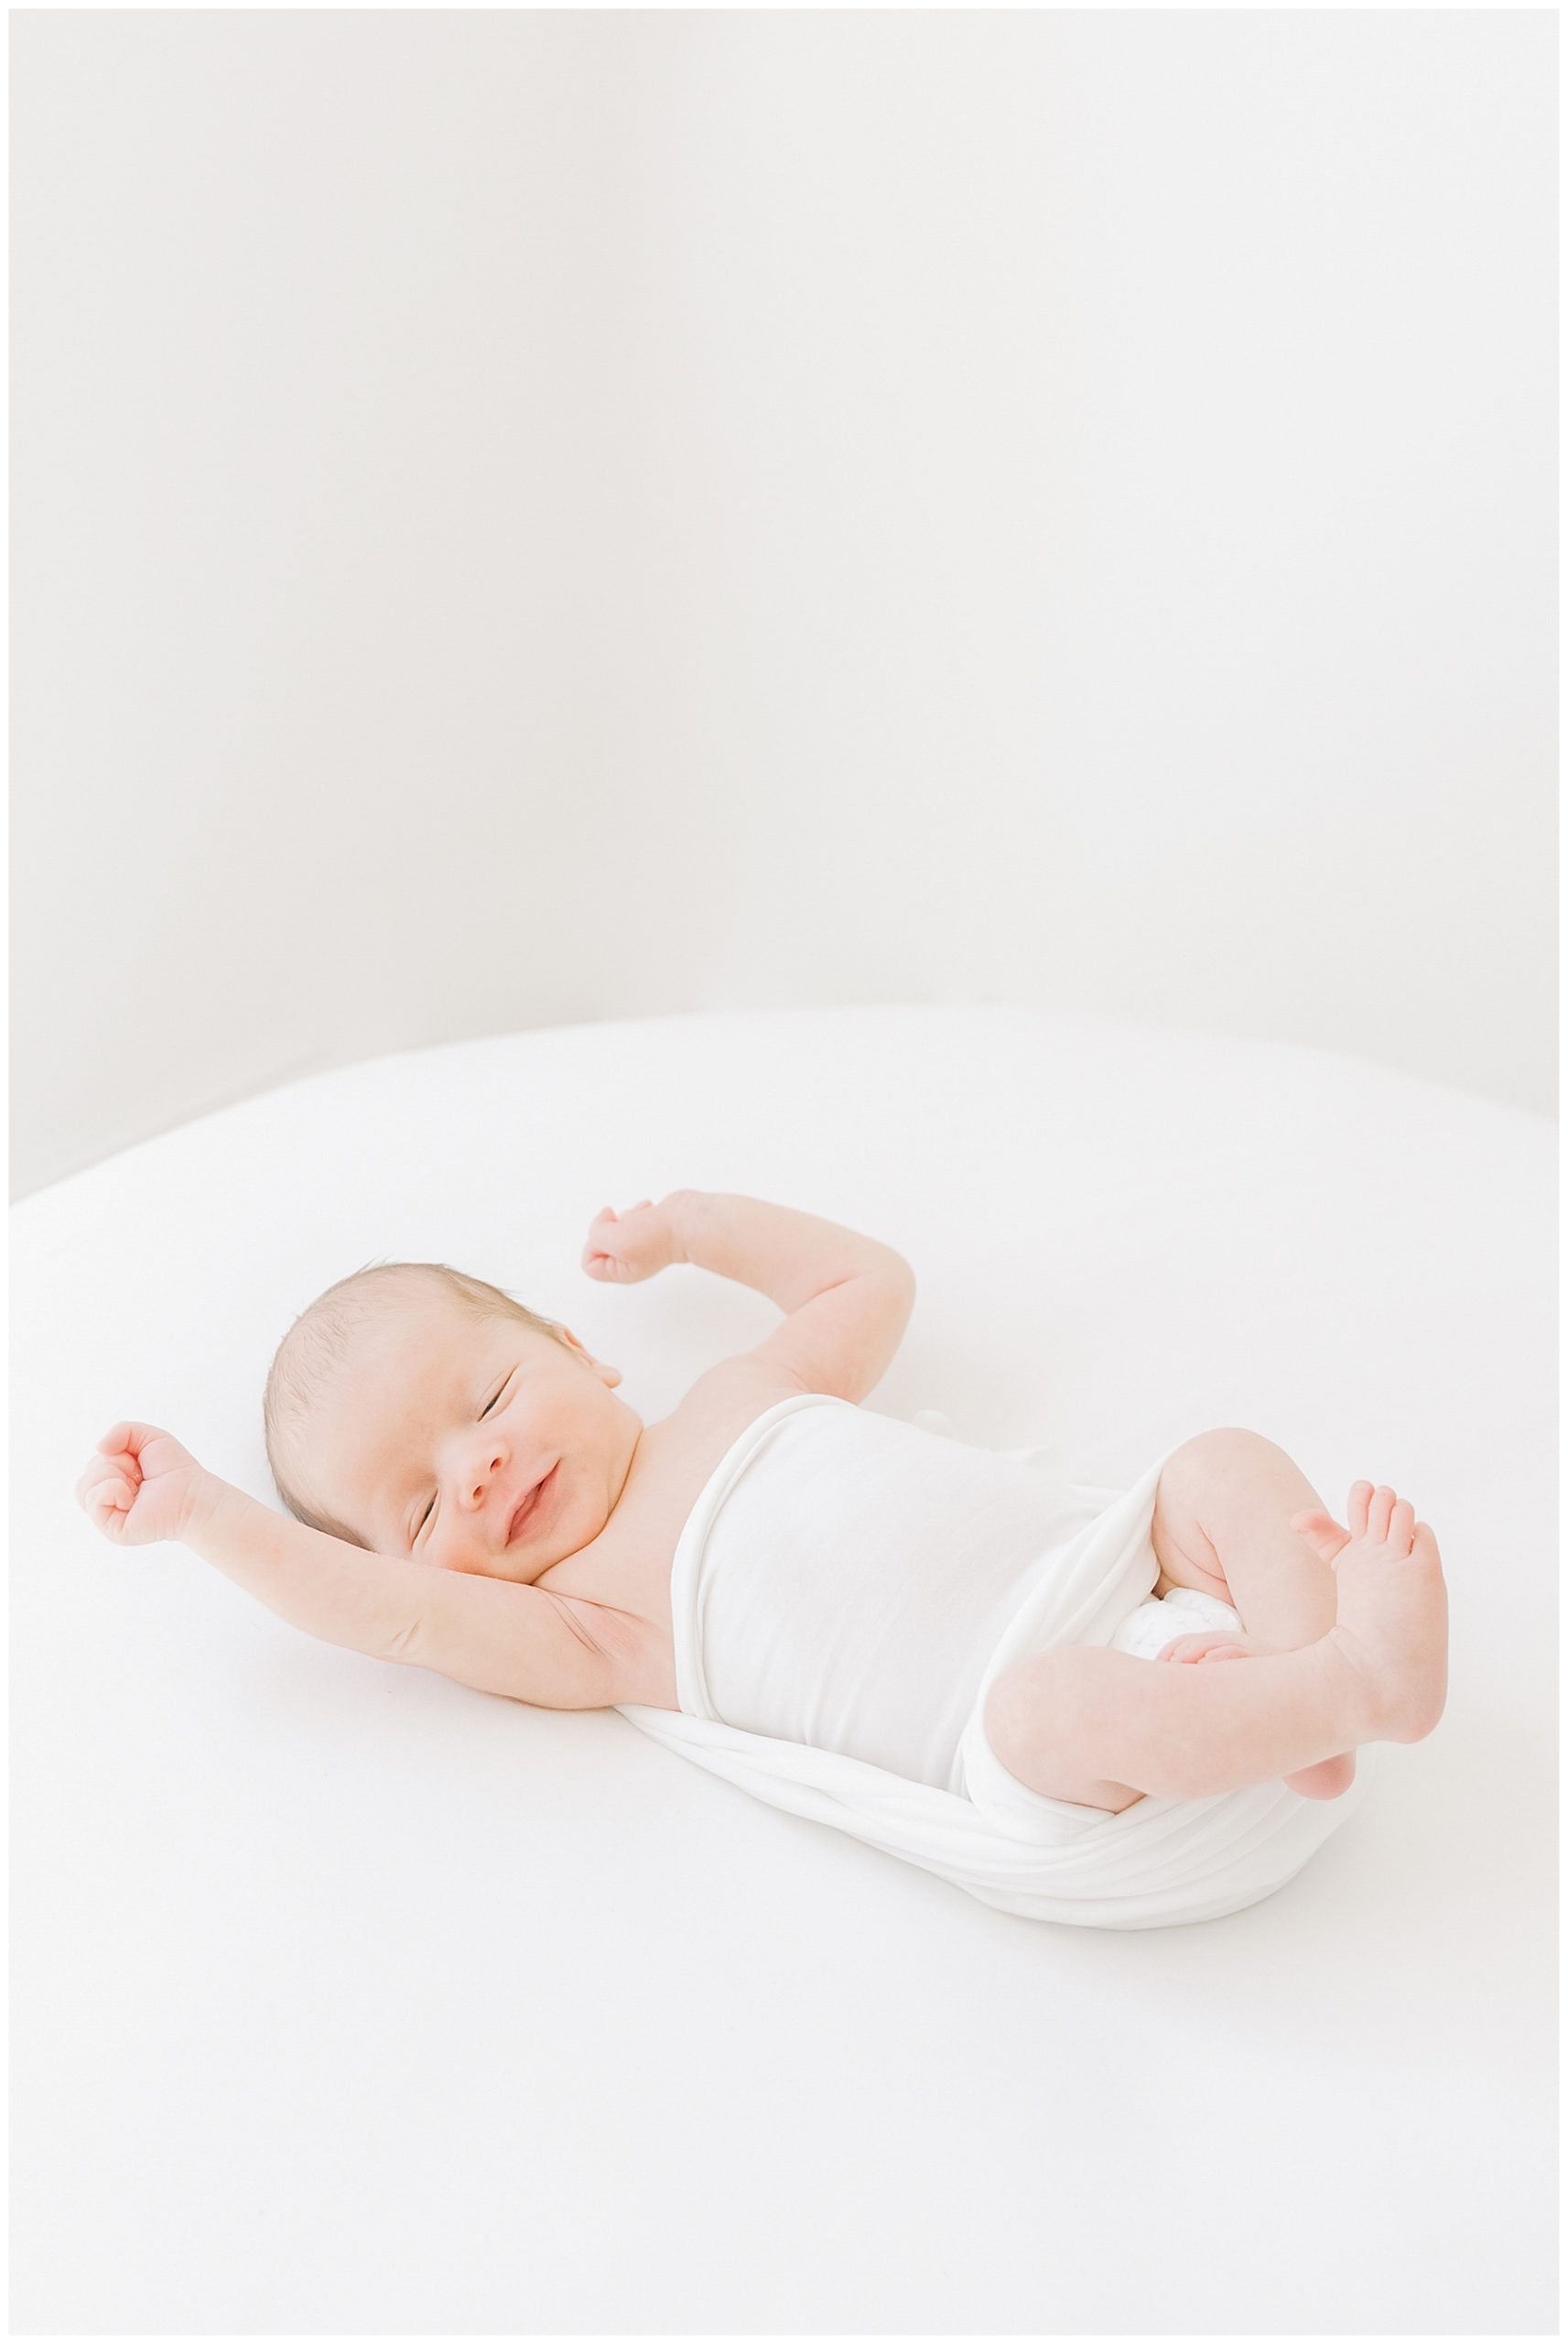 newborn baby stretches - newborn photographer katie petrick photography 